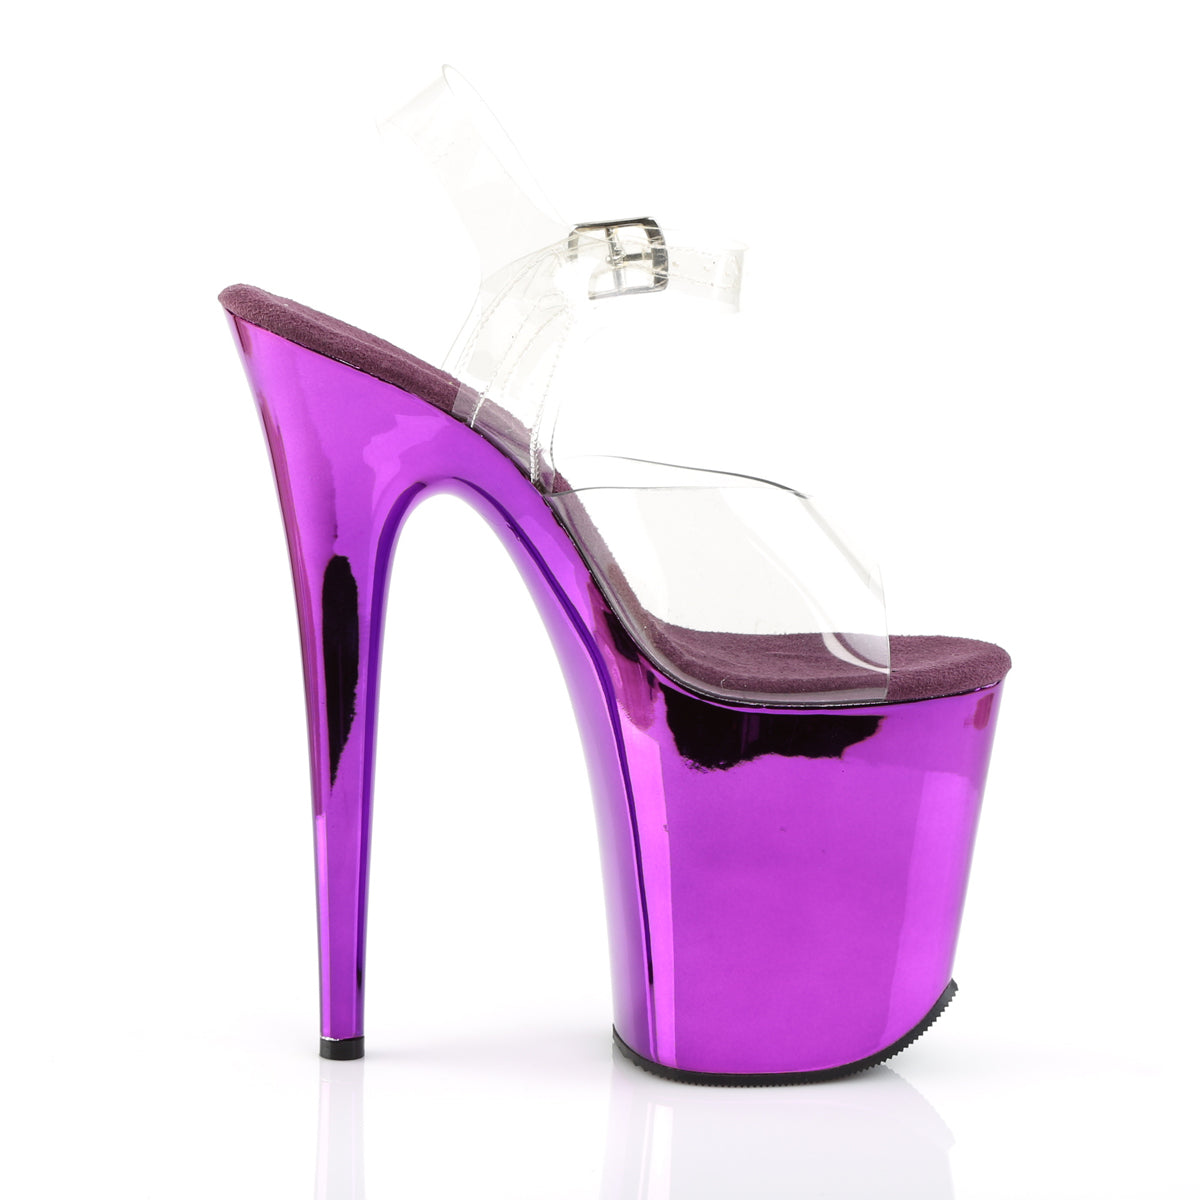 FLAMINGO-808 Clear & Purple Ankle Peep Toe High Heel